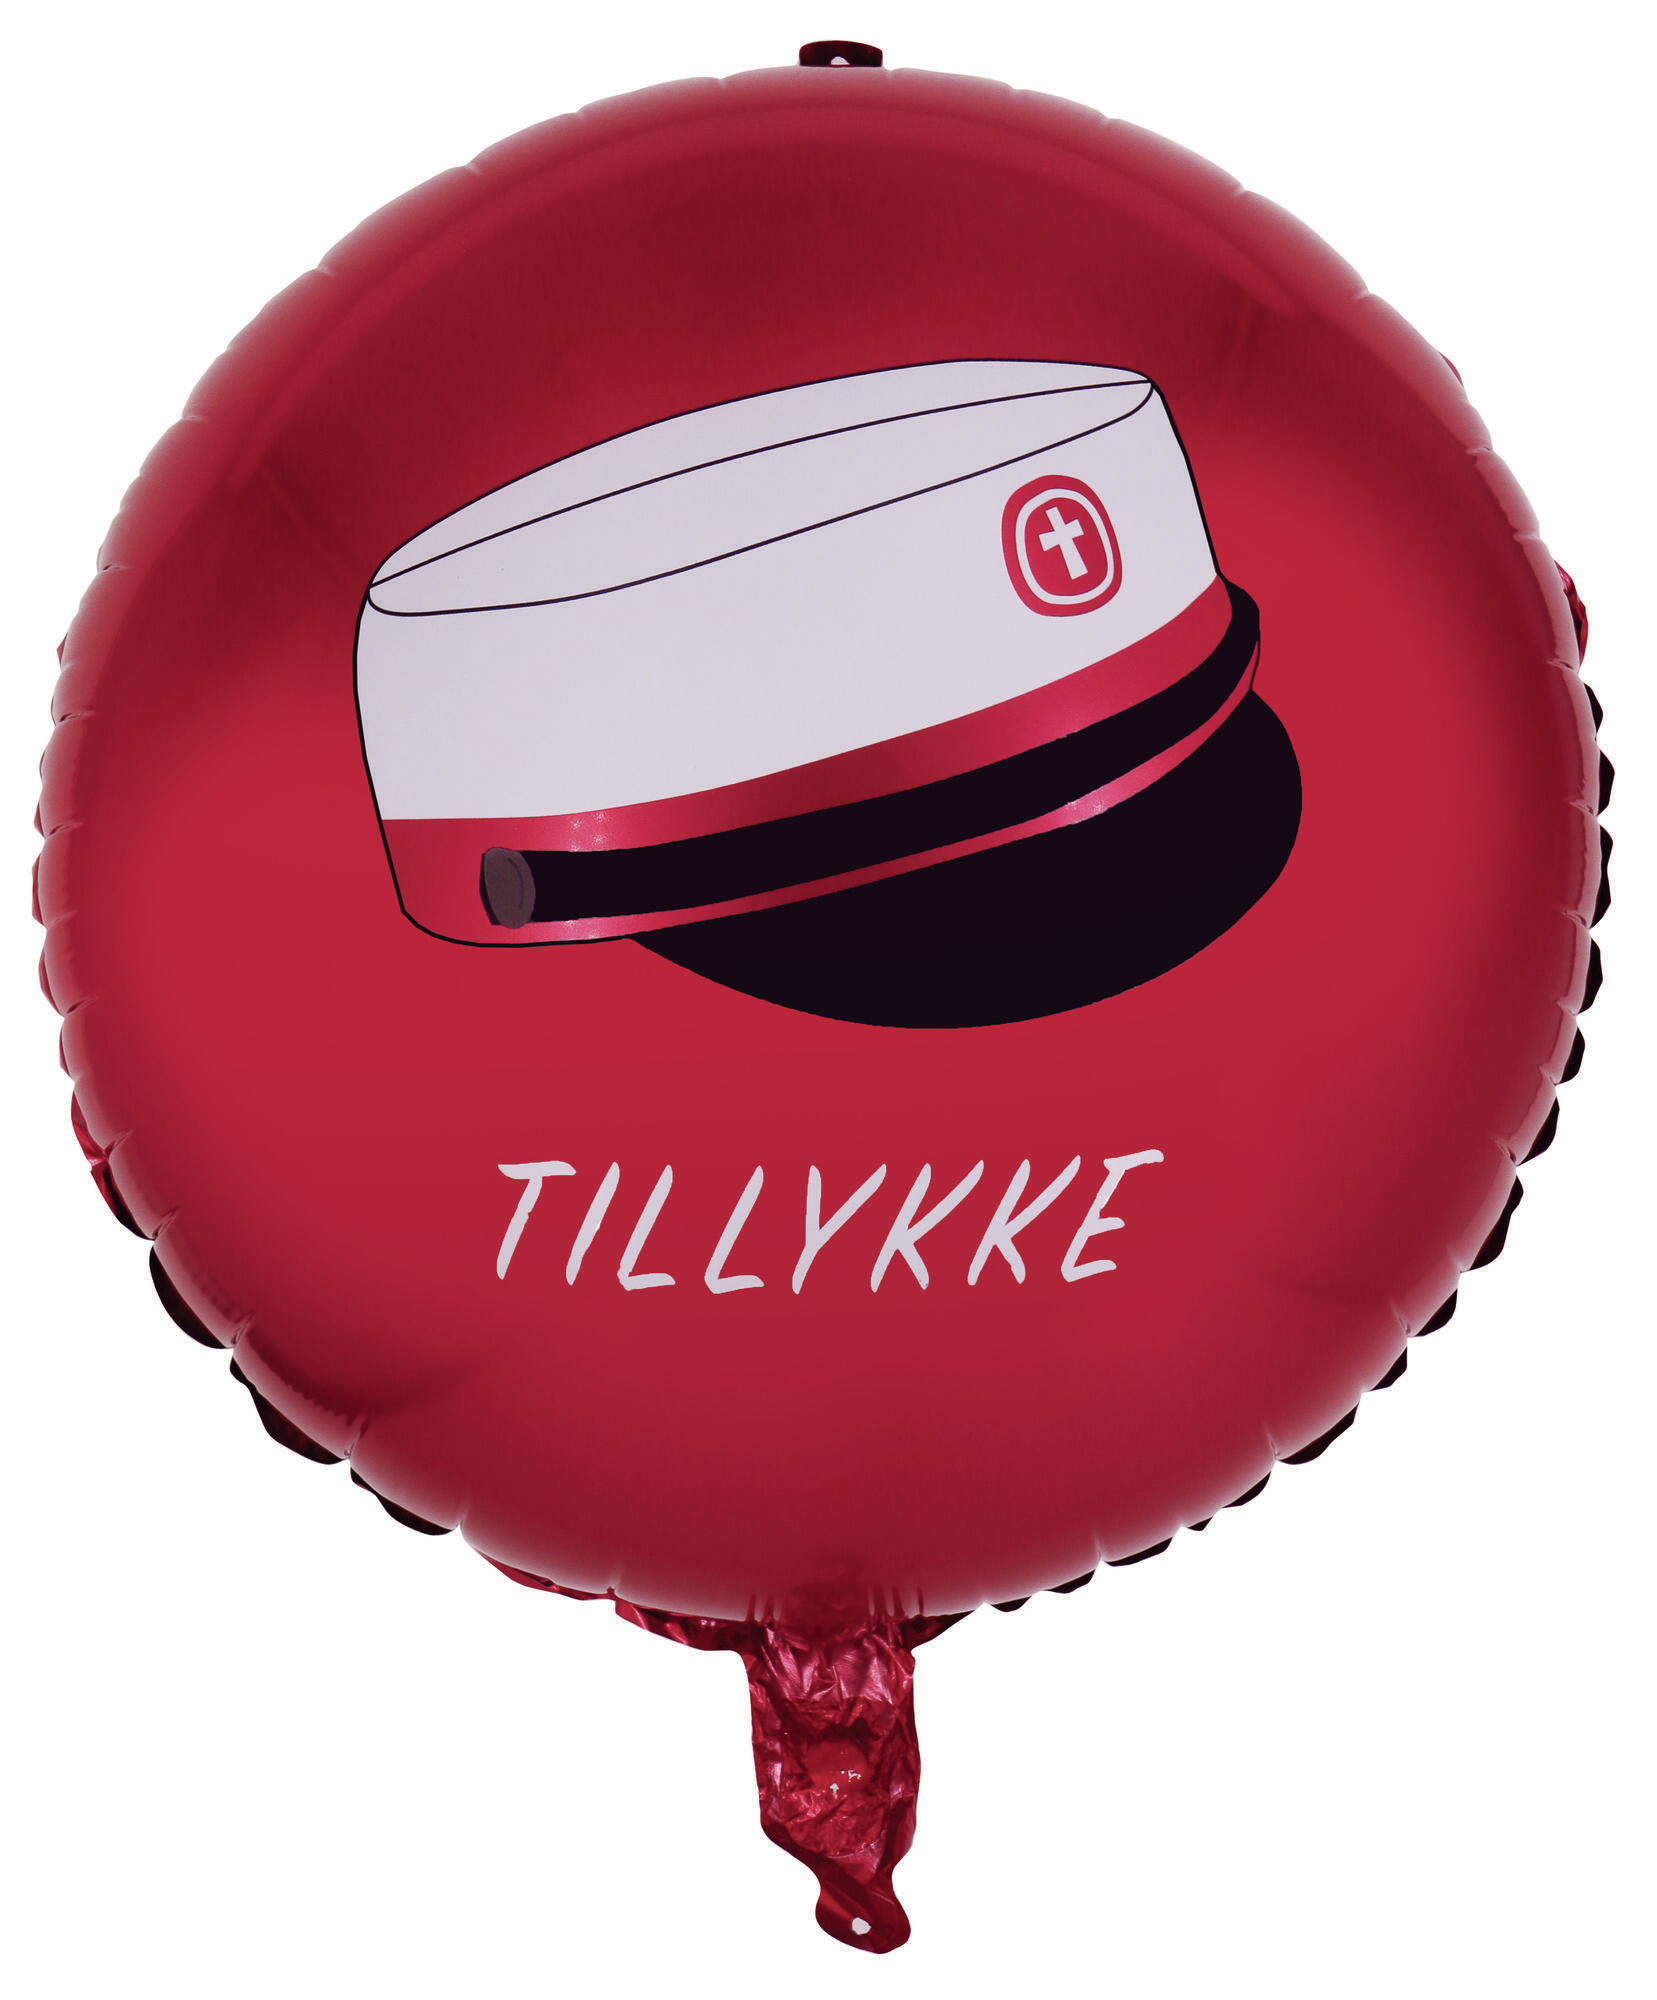 Køb Folieballon studenterhue i rød hos gag.dk